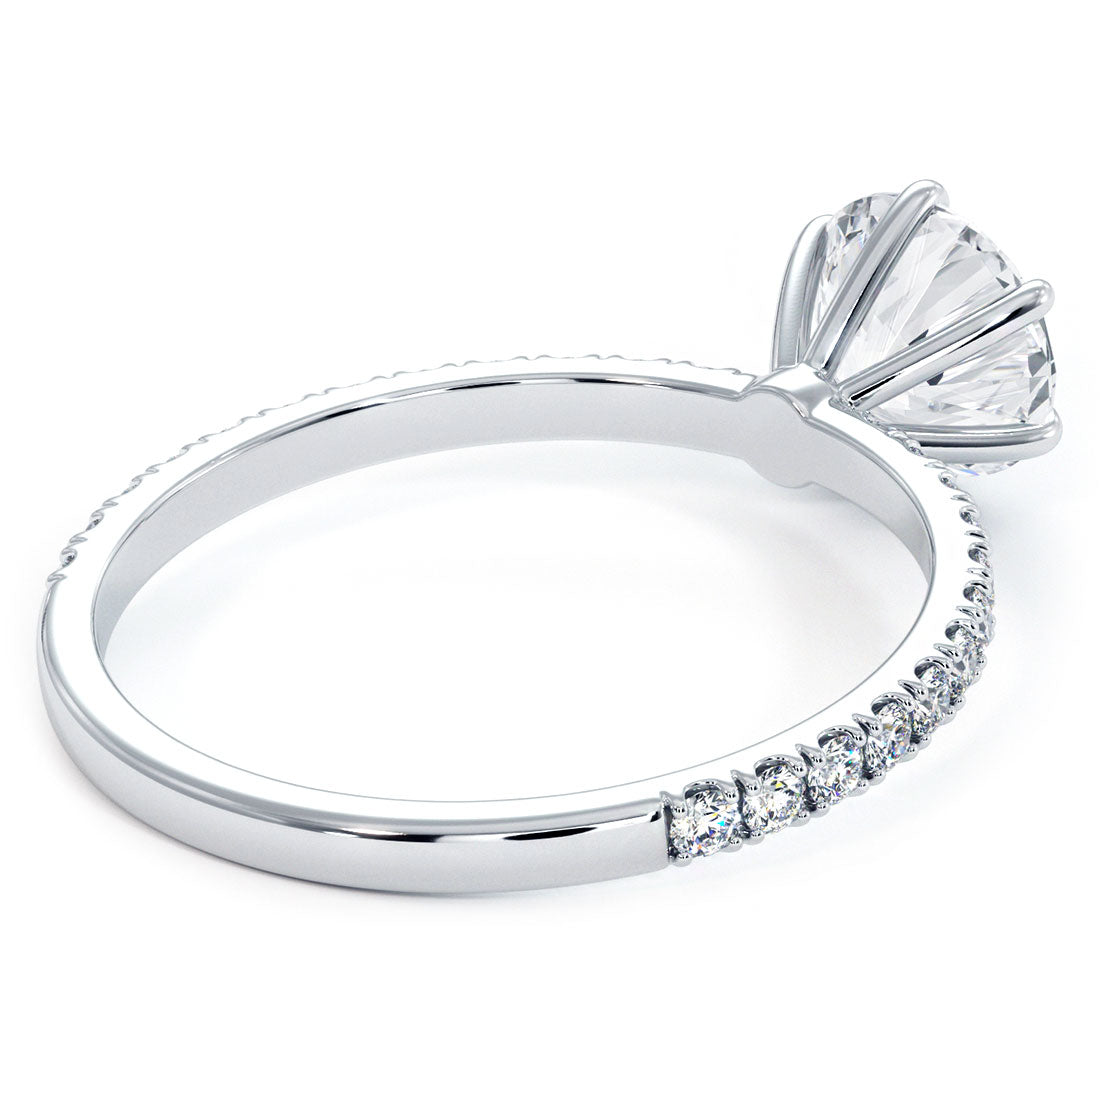 6 Prong Head, Petite Micropave Diamond Shank, Engagement Ring Setting